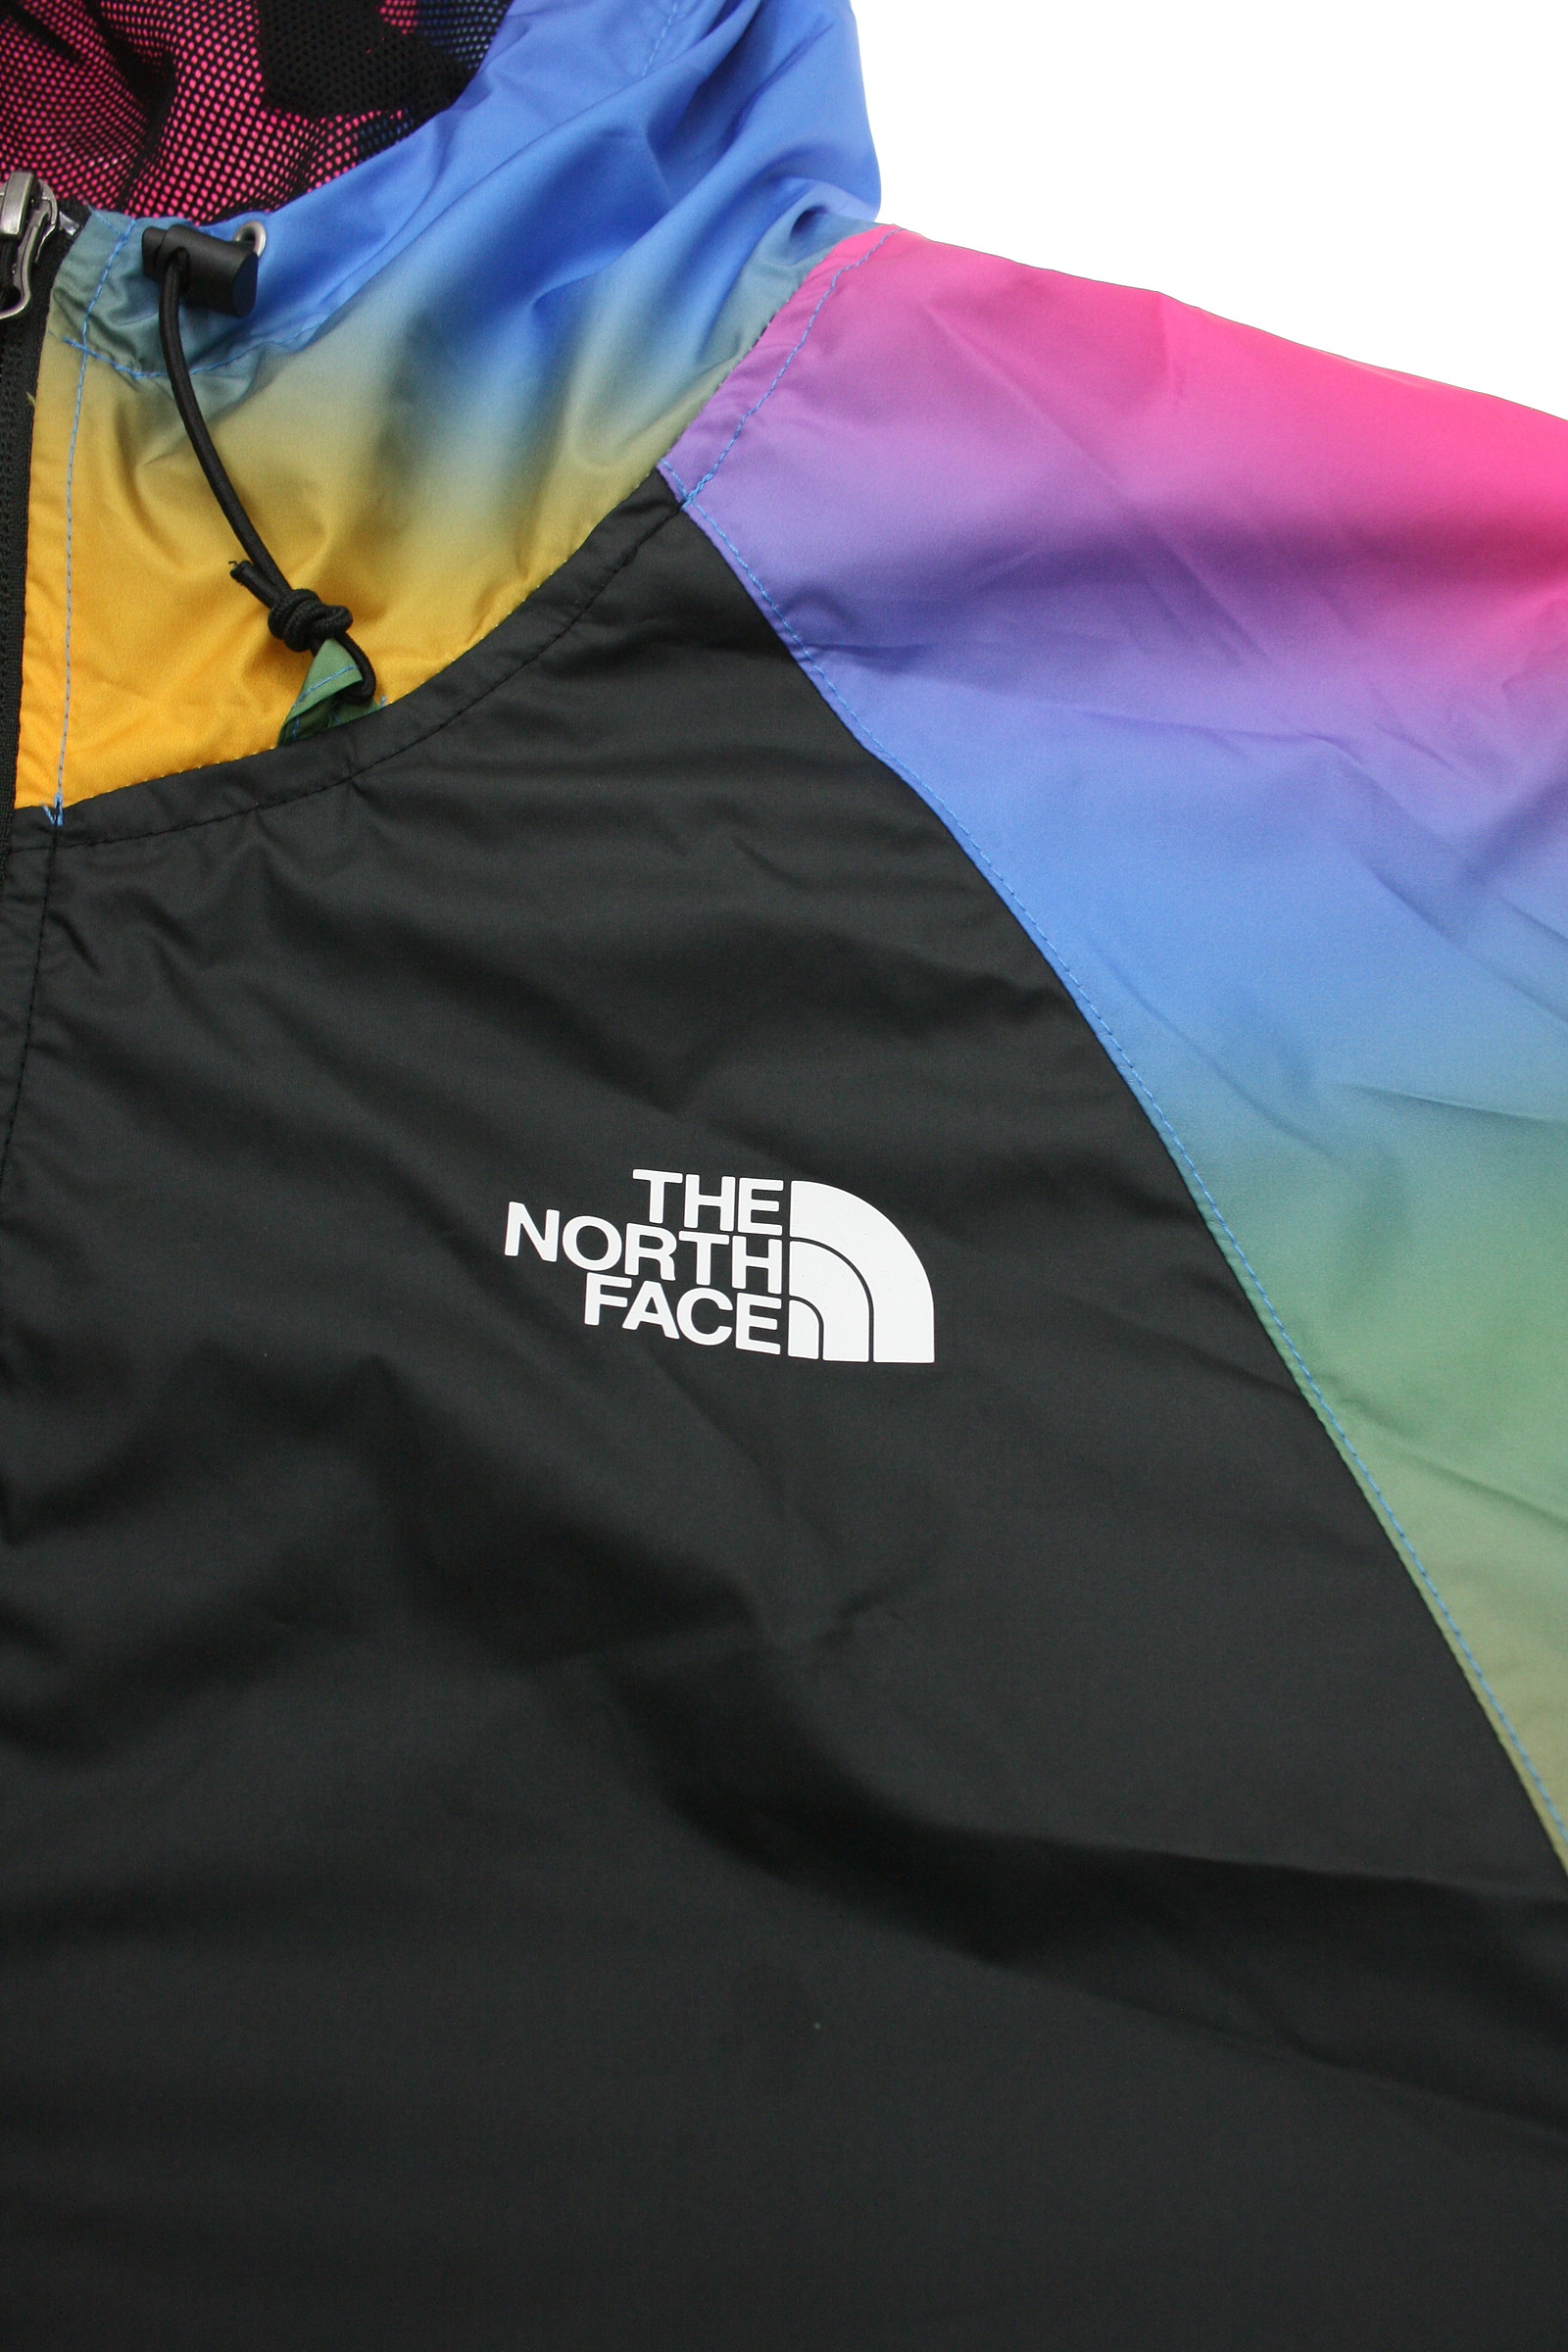 The North Face Hydrenaline 2000 Men's Multi-Colored Color Block Jacket $100